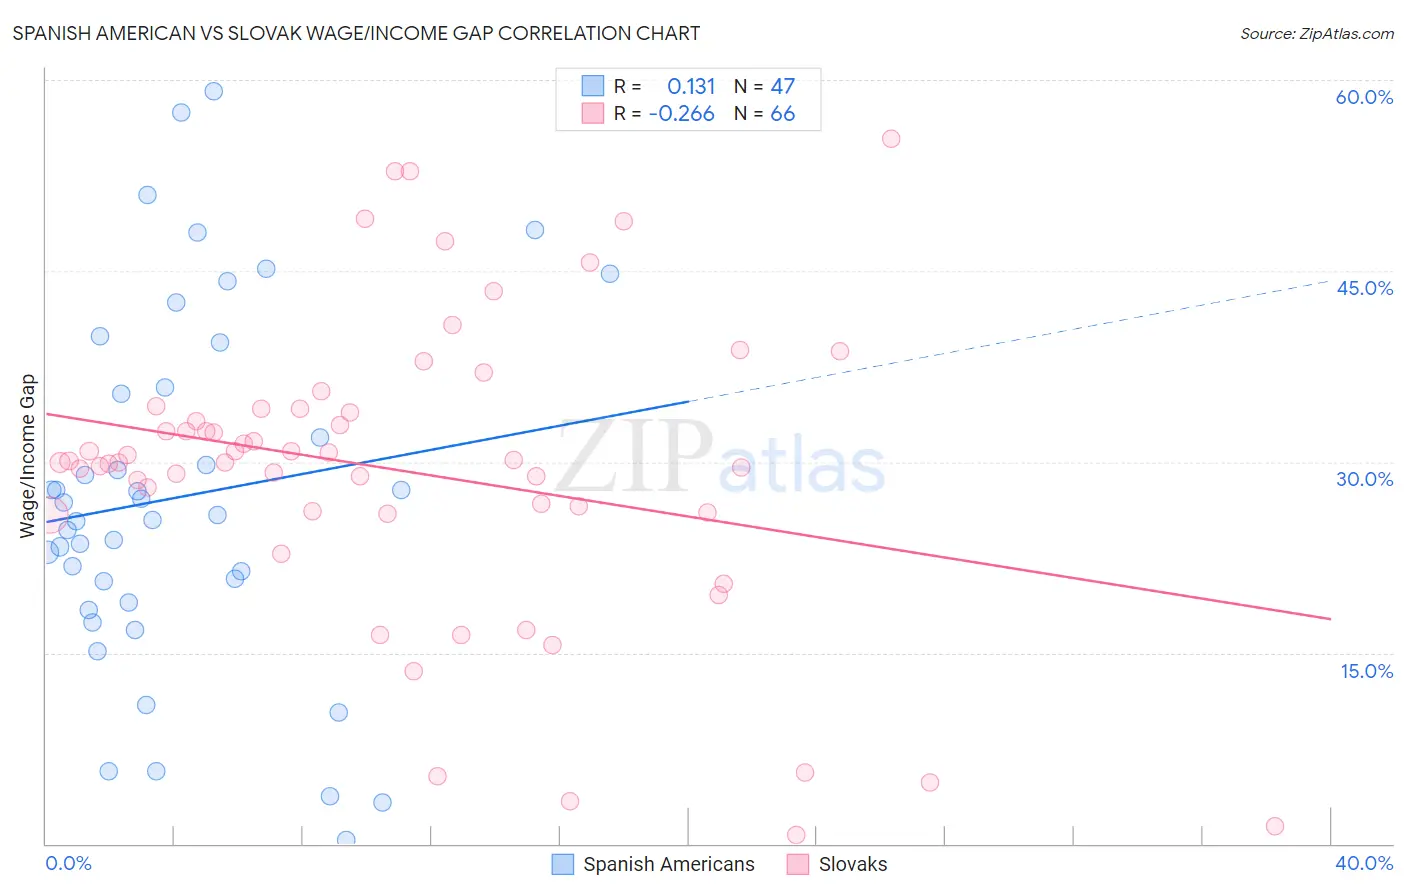 Spanish American vs Slovak Wage/Income Gap